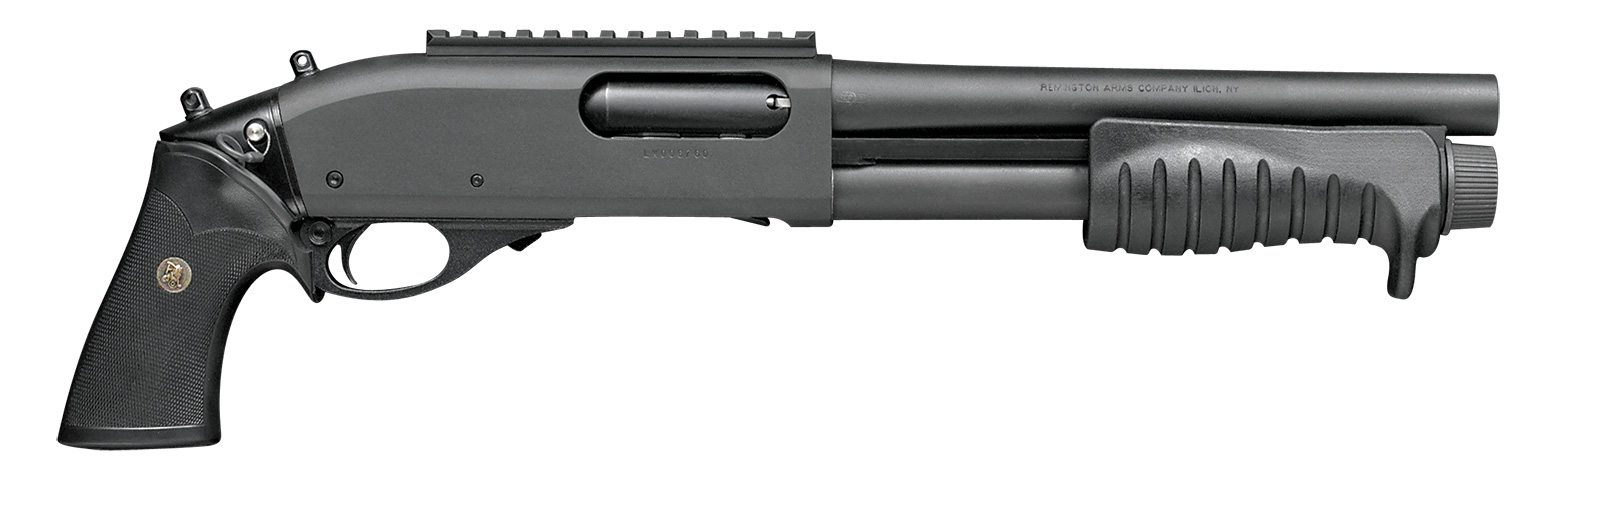 Remington 870 BREACHER PISTOL GRIP